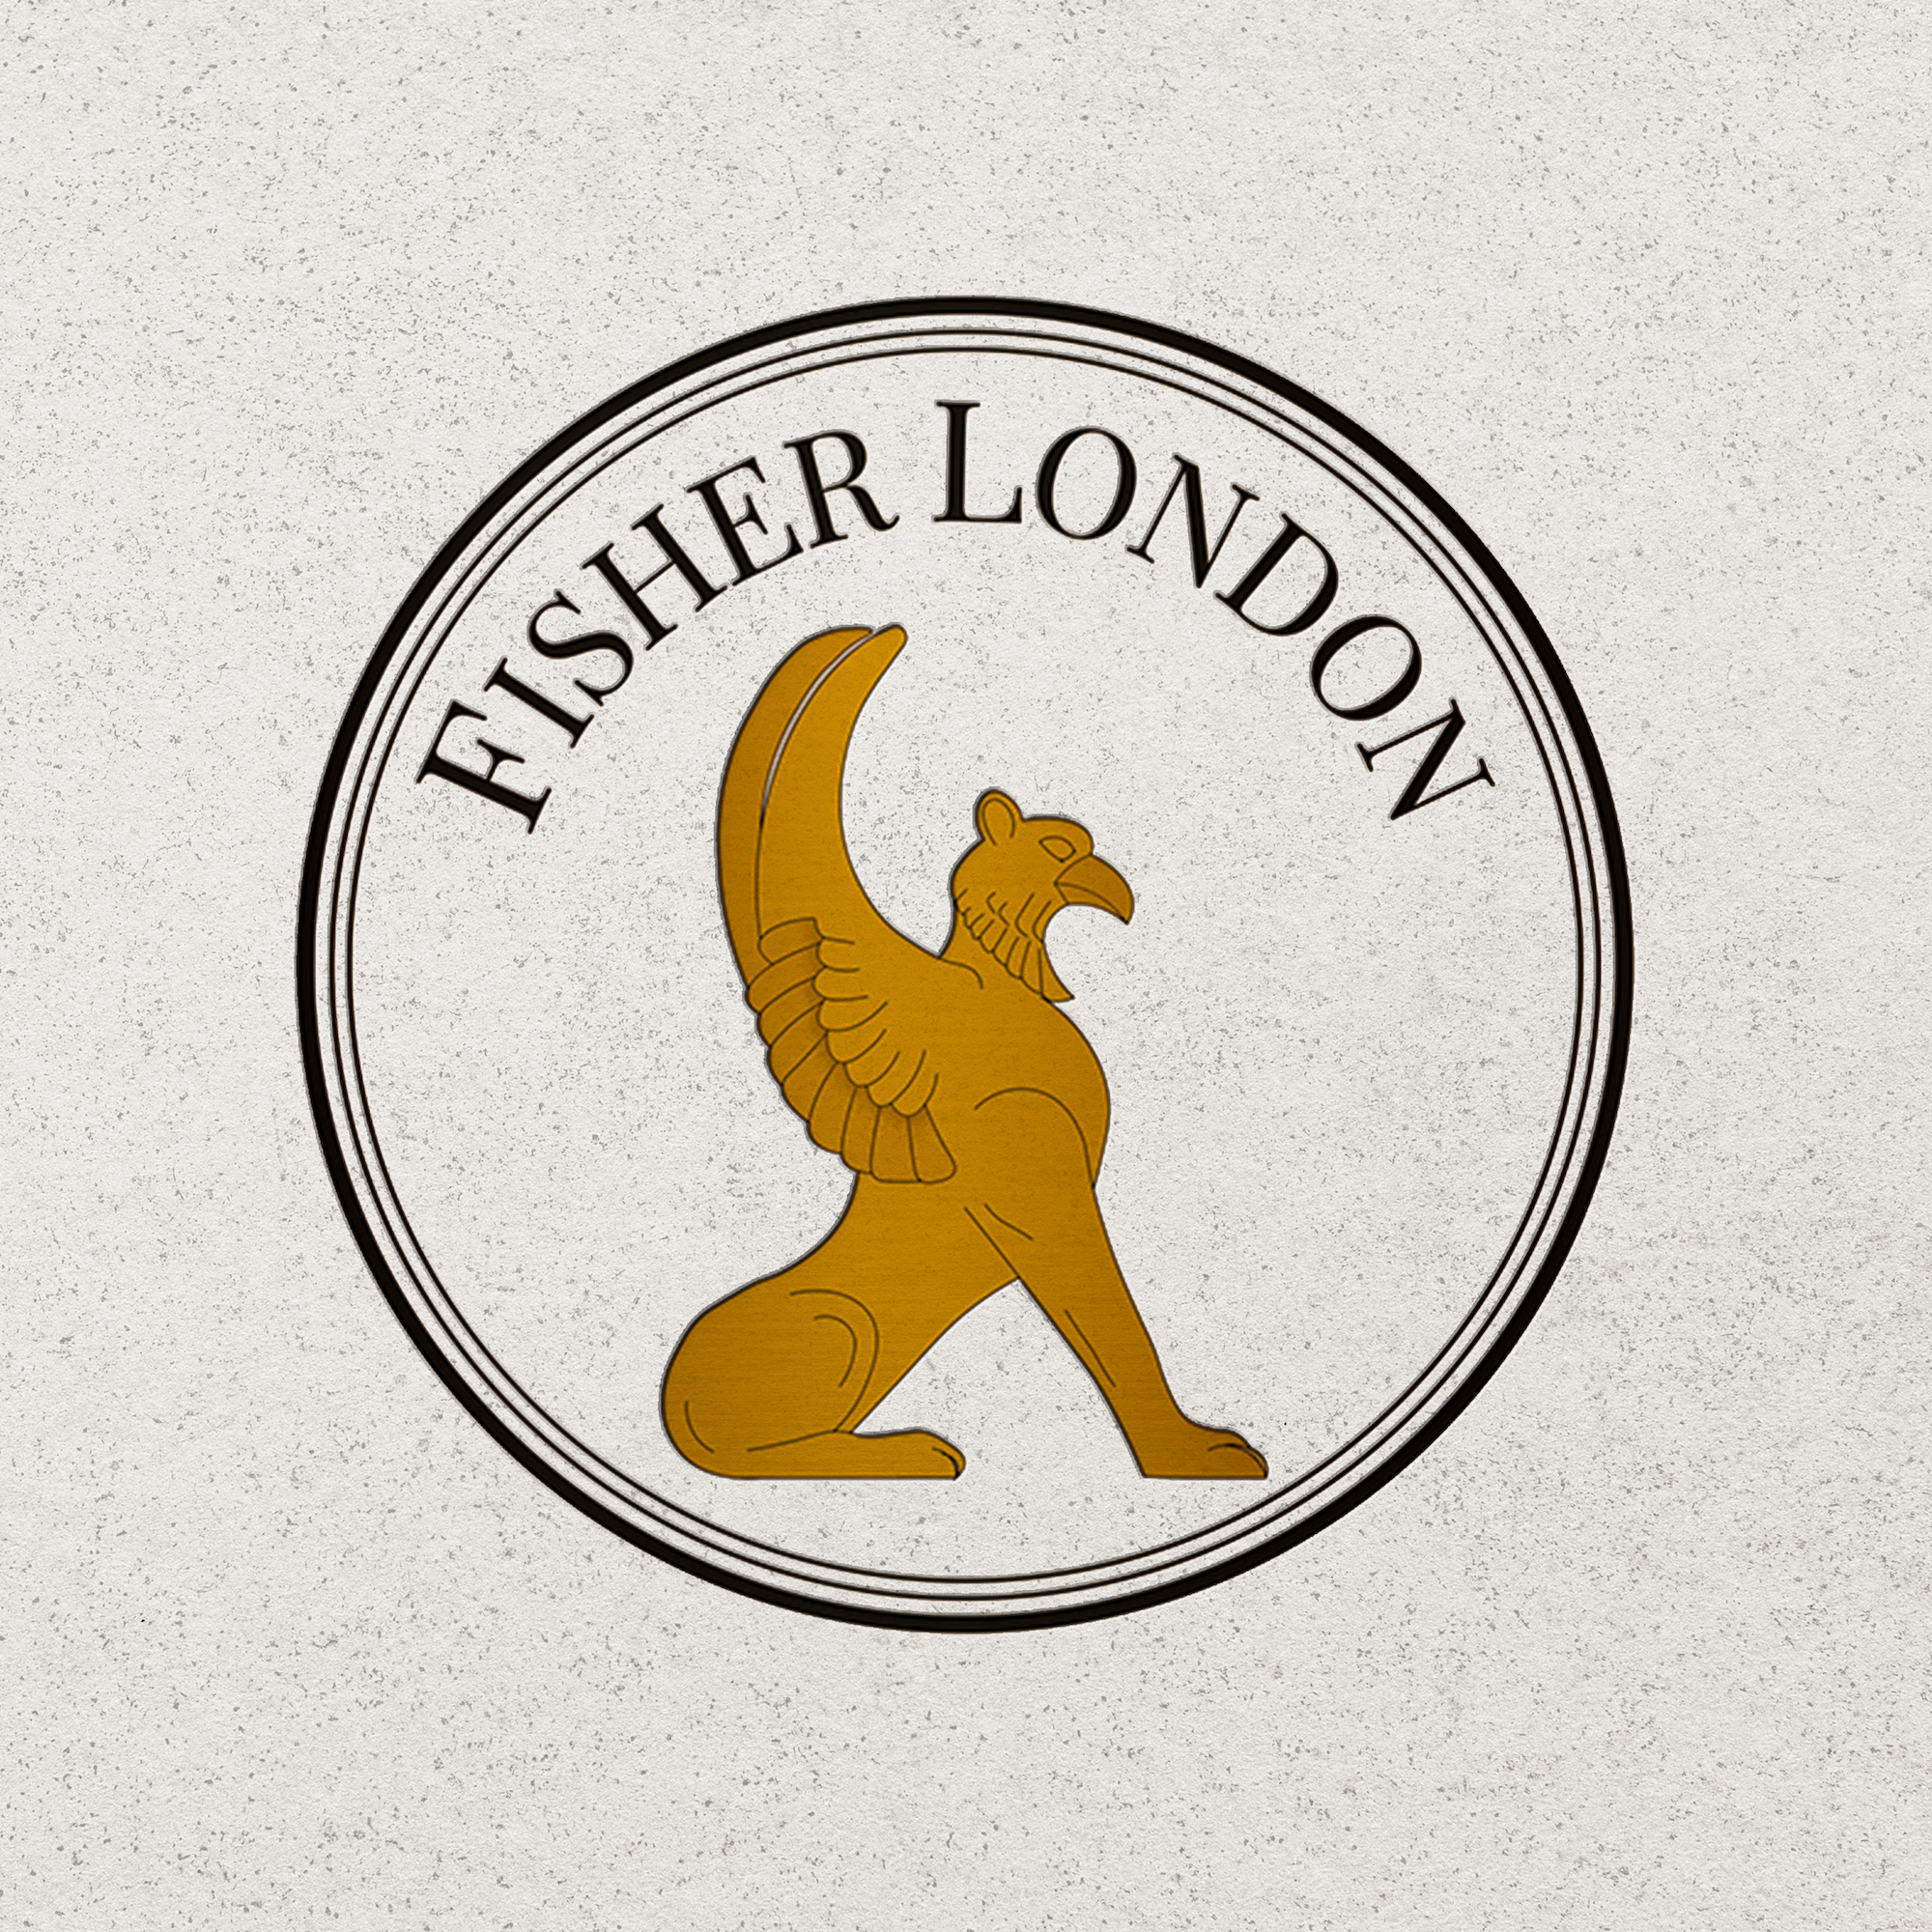 Fisher London mockup.png